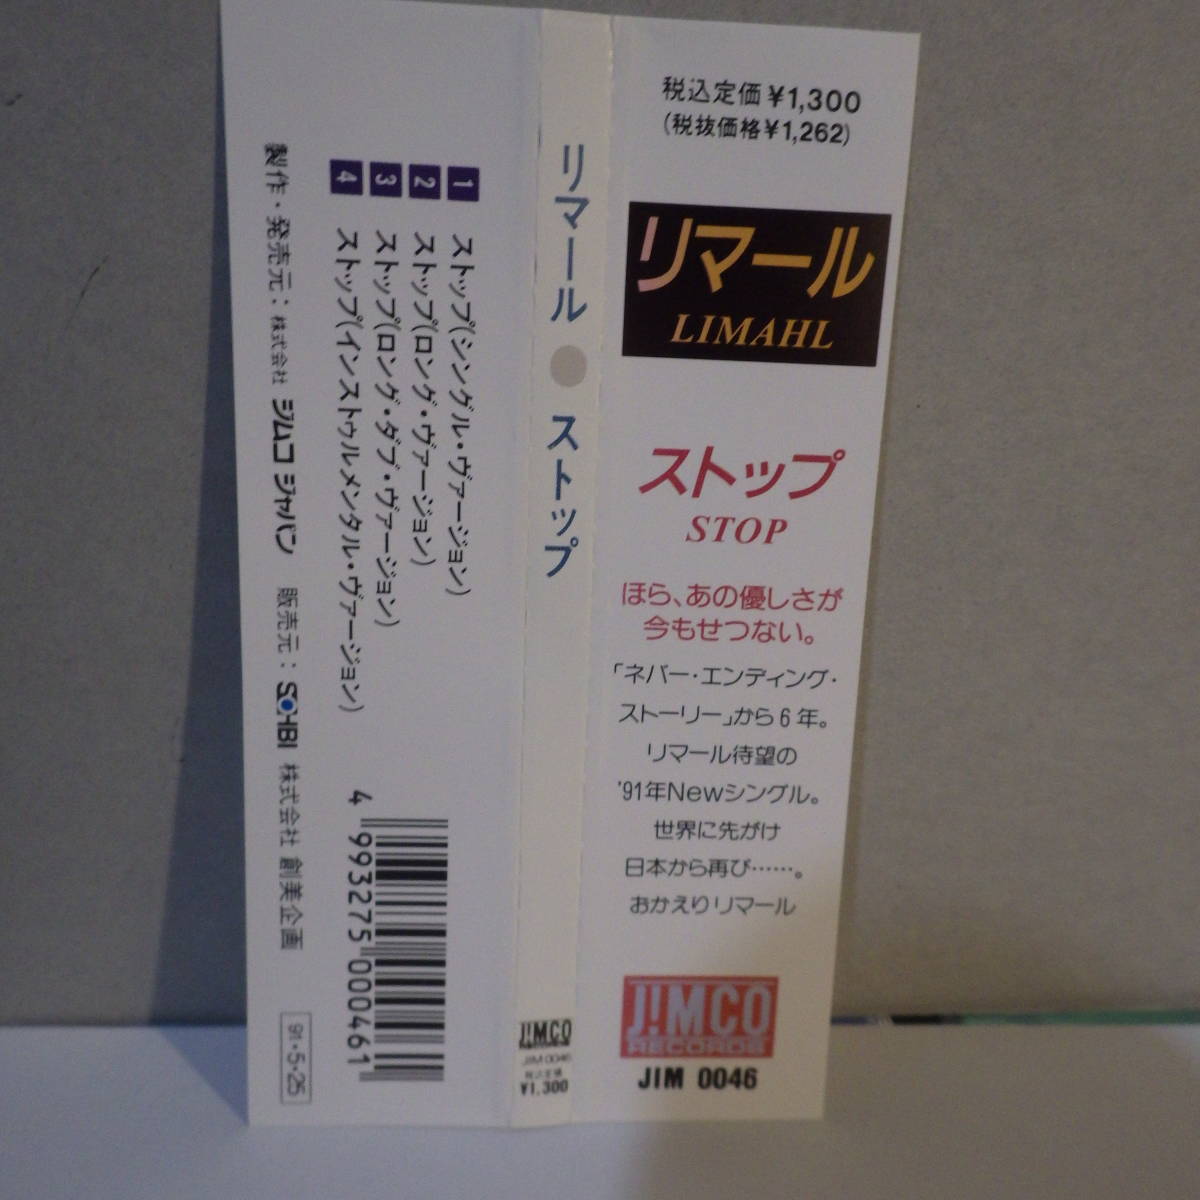 Yahoo!オークション - 帯付 【CD】リマール ストップ LIMAHL STOP【...